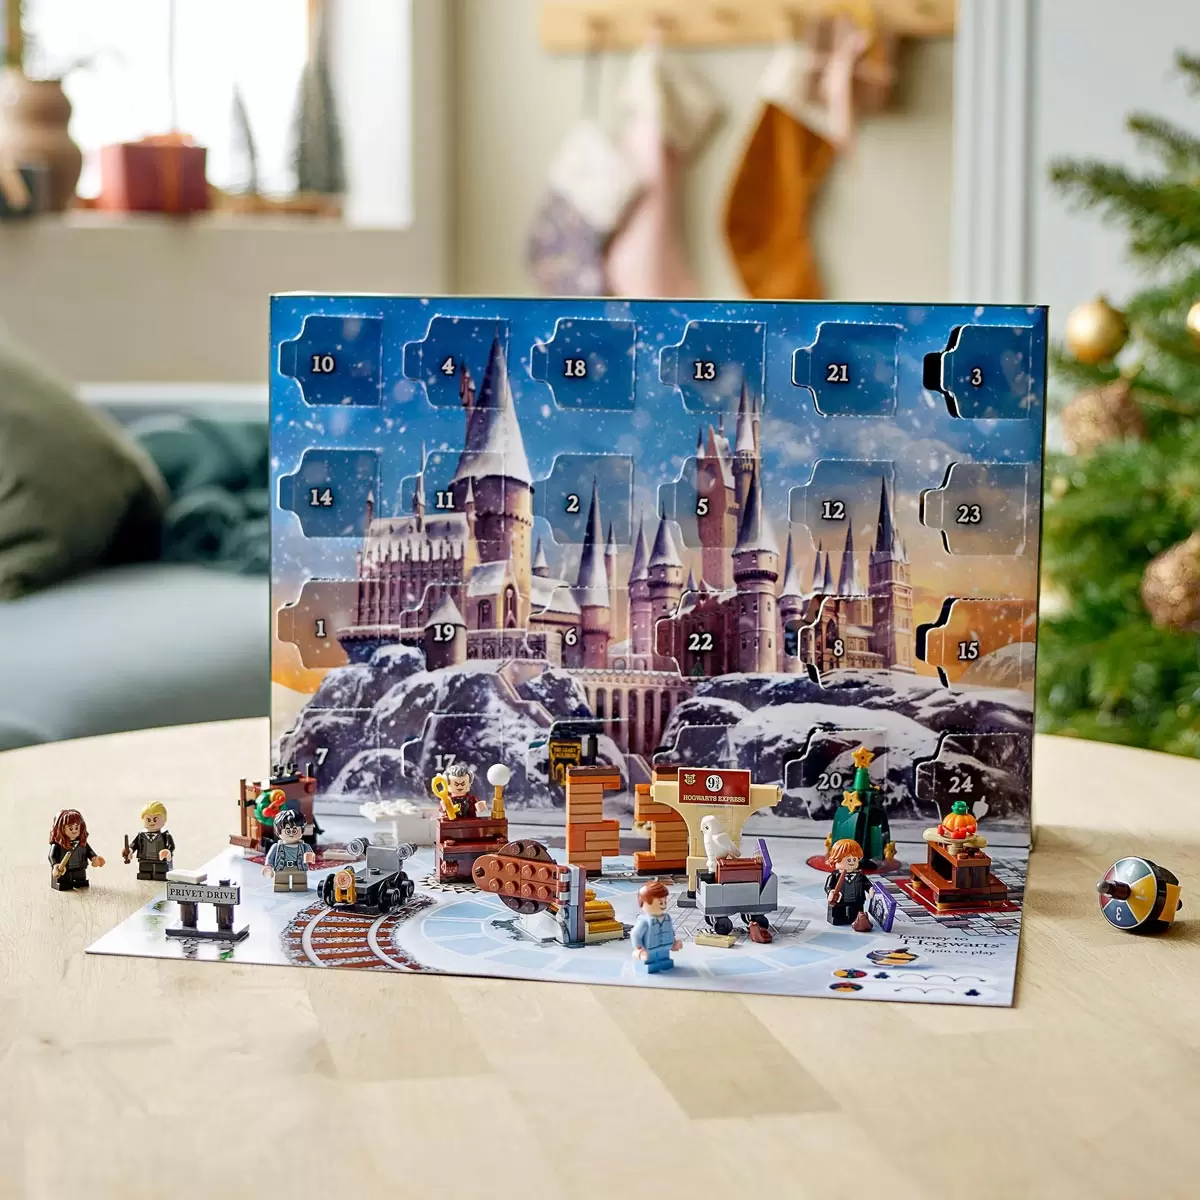 Buy LEGO Harry Potter Advent Calendar Lifestyle2 Image at Costco.co.uk